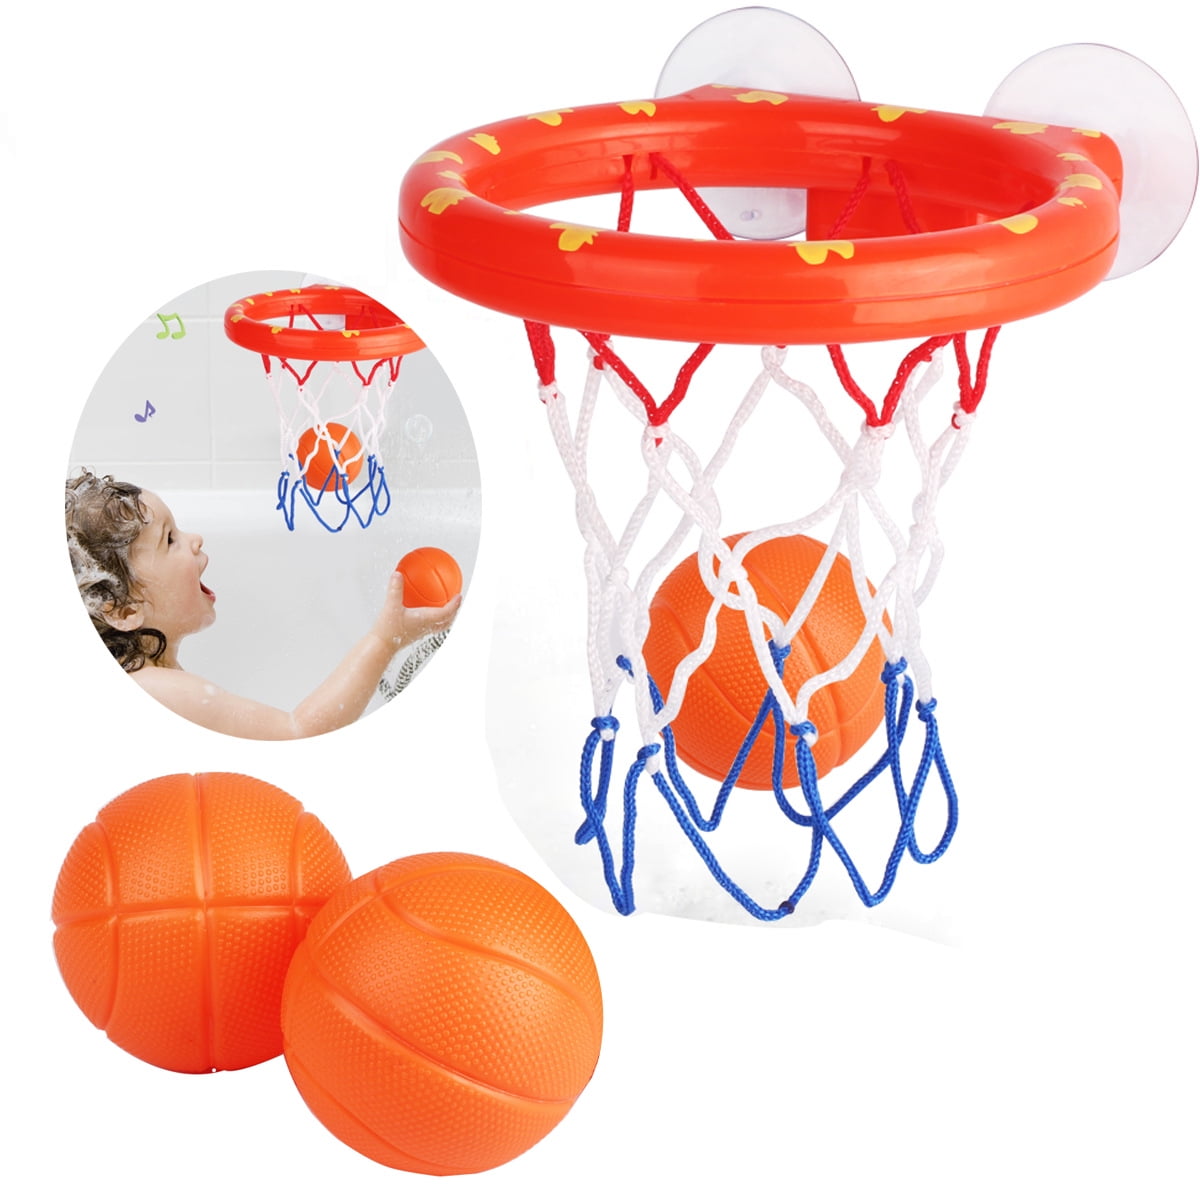 Kids Children Bath Toy Fun Basketball Hoop Balls Set for Boys and Girls Kids 